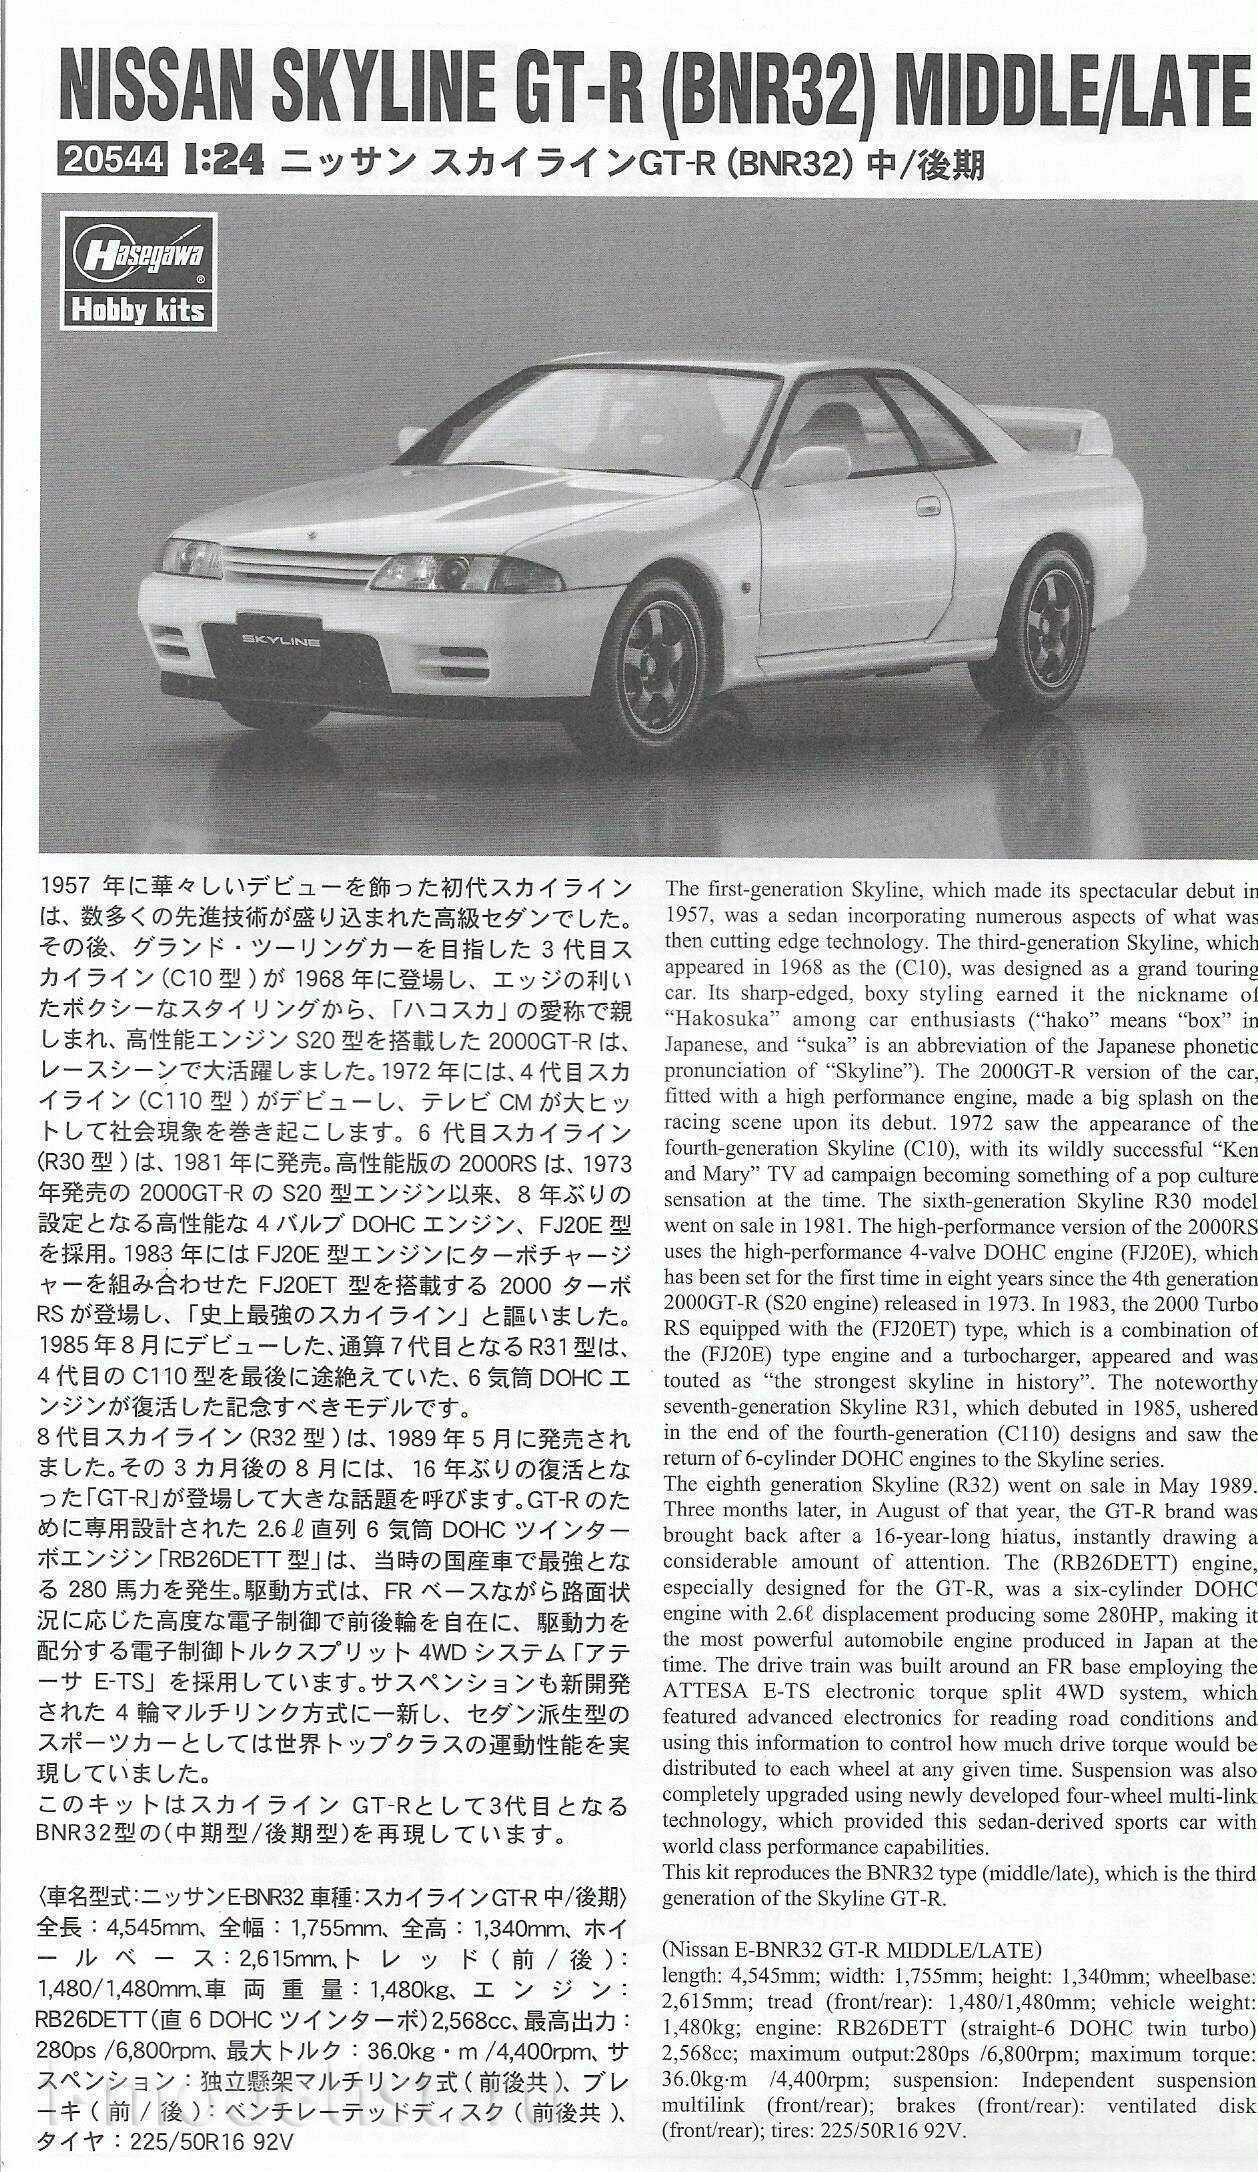 20544 Hasegawa 1/24 Автомобиль Nissan Skyline GT-R (BNR32) Middle/Late (1991/1993)